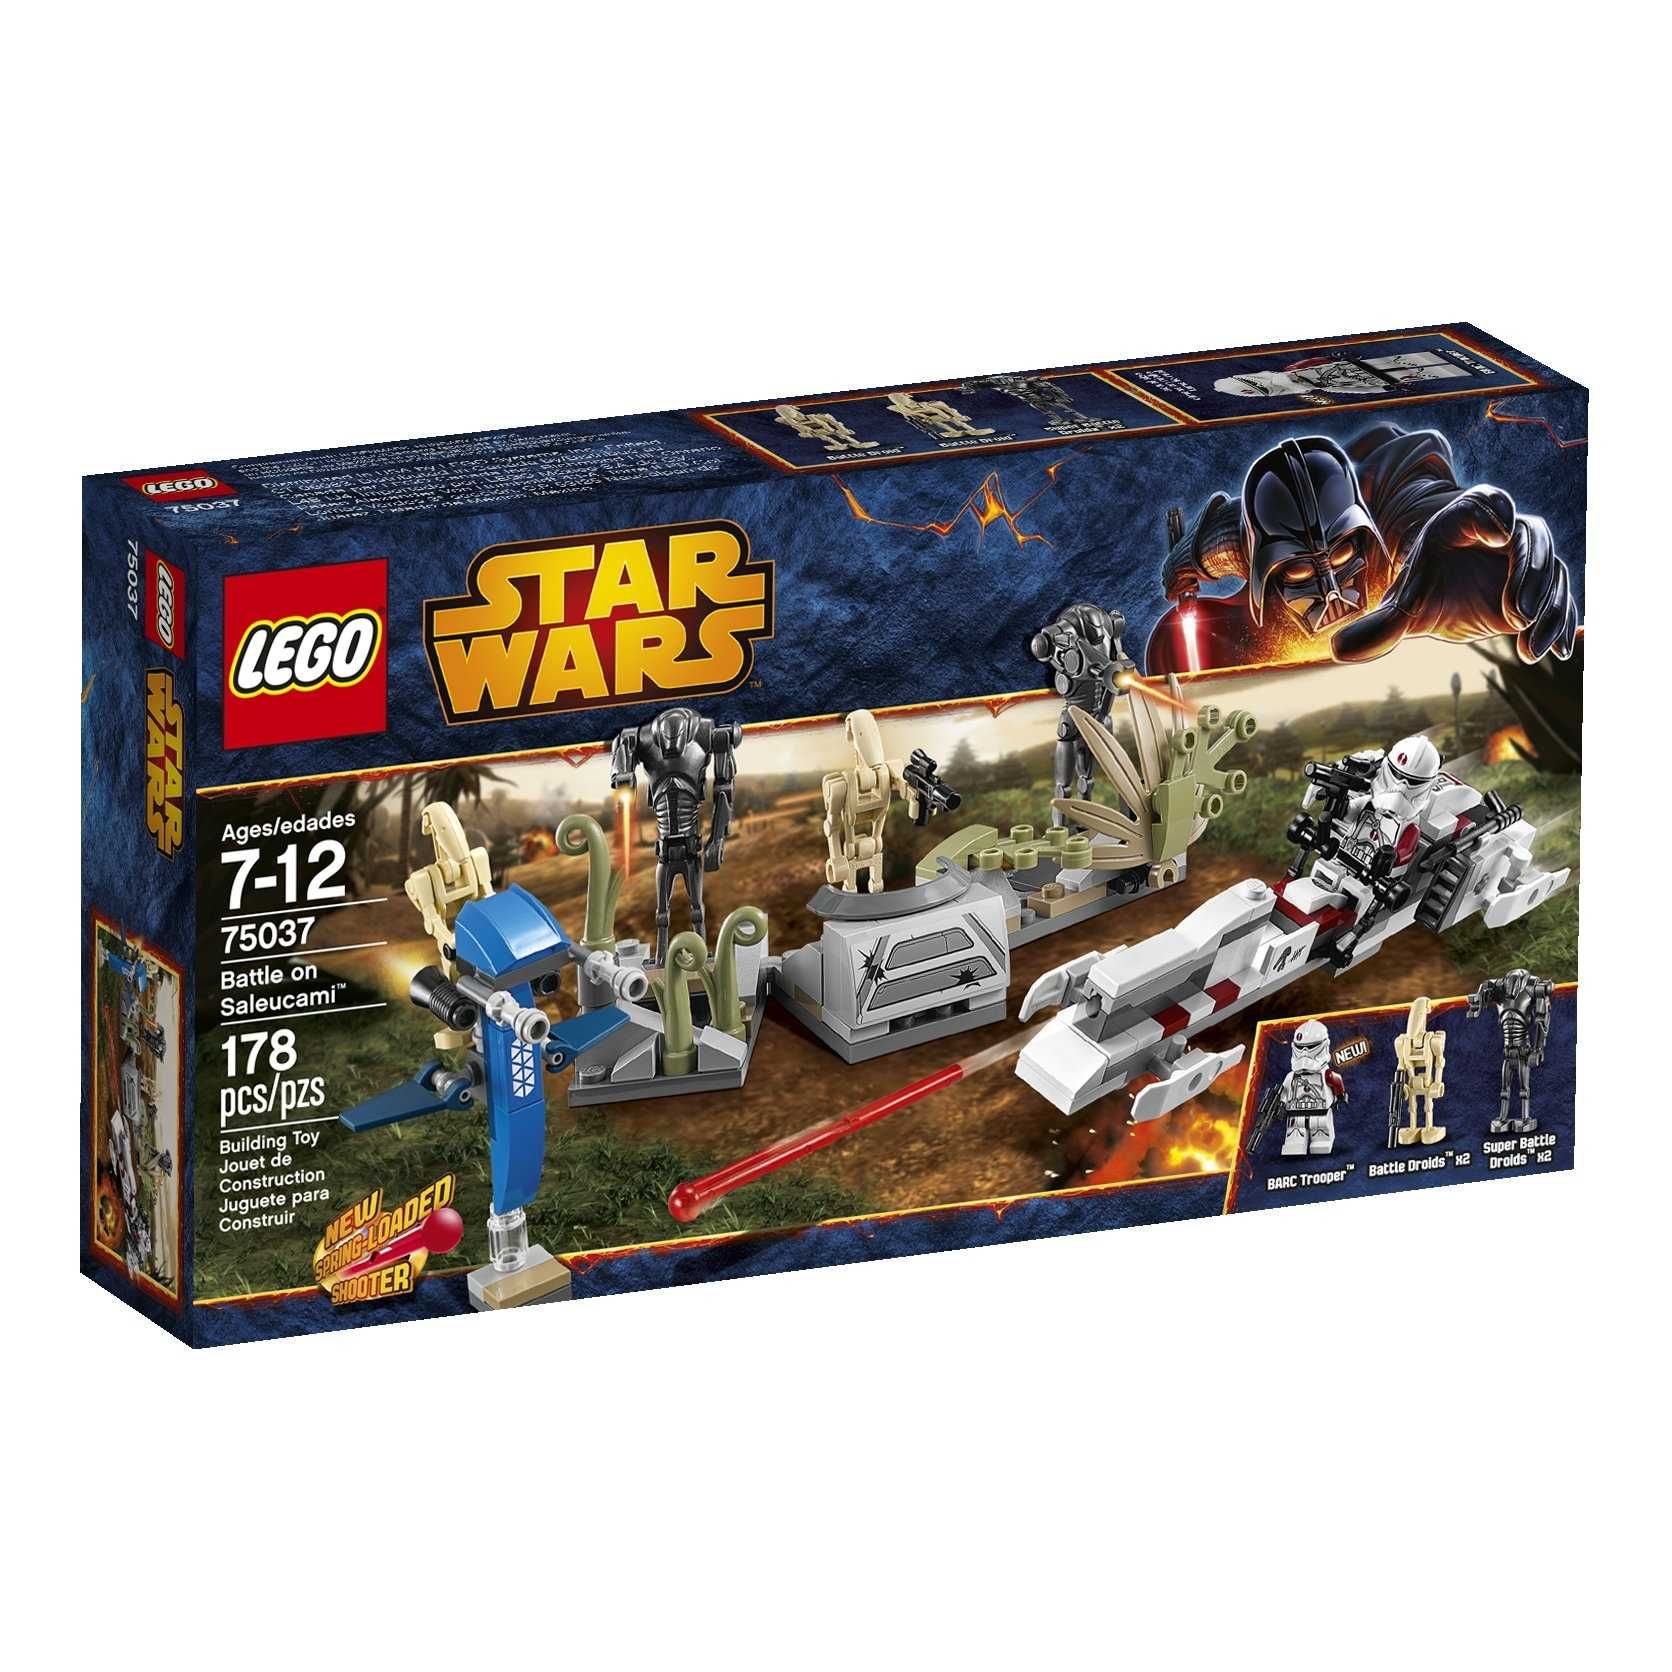 75037 LEGO Star Wars The Clone Wars Battle on Saleucami - Selado